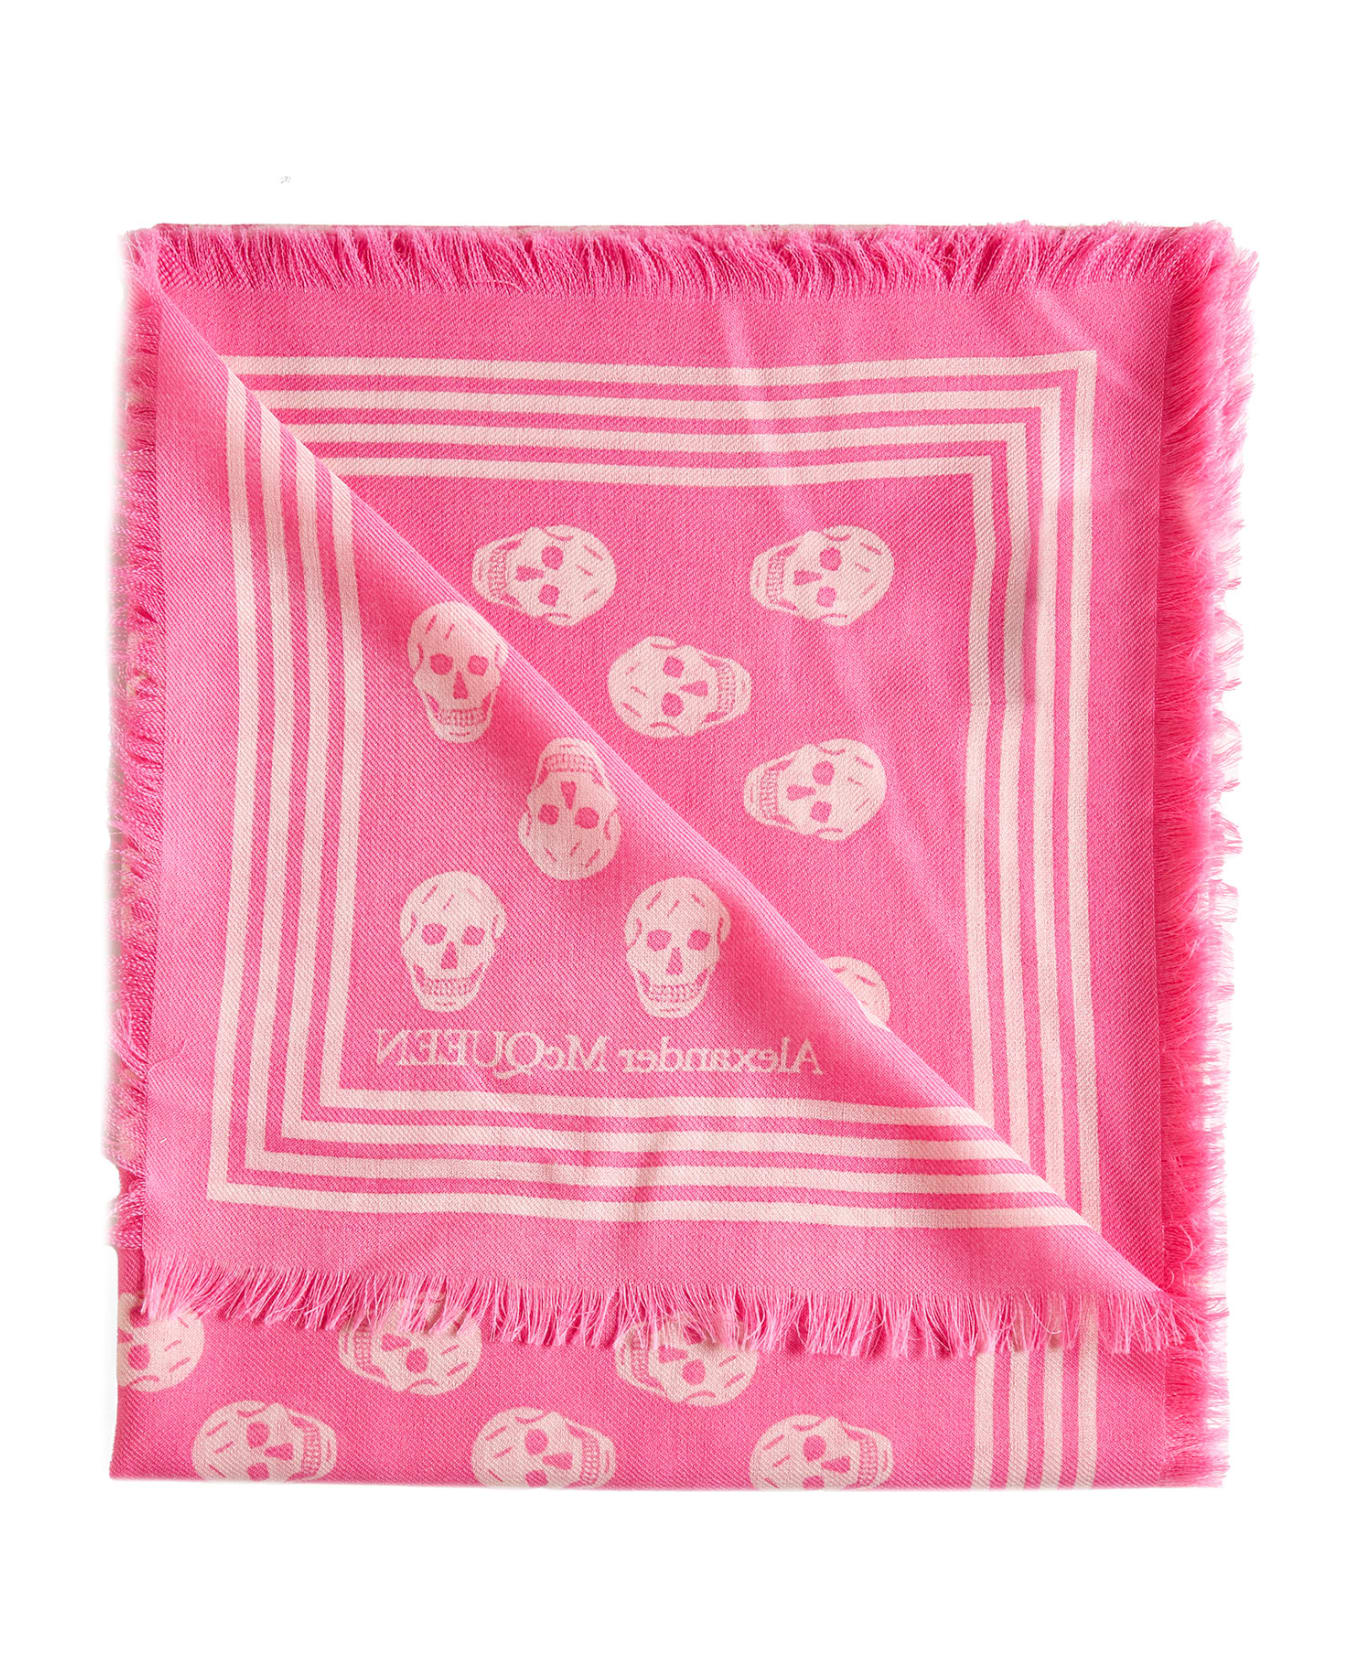 Alexander McQueen Skull Scarf - Roseate Pink